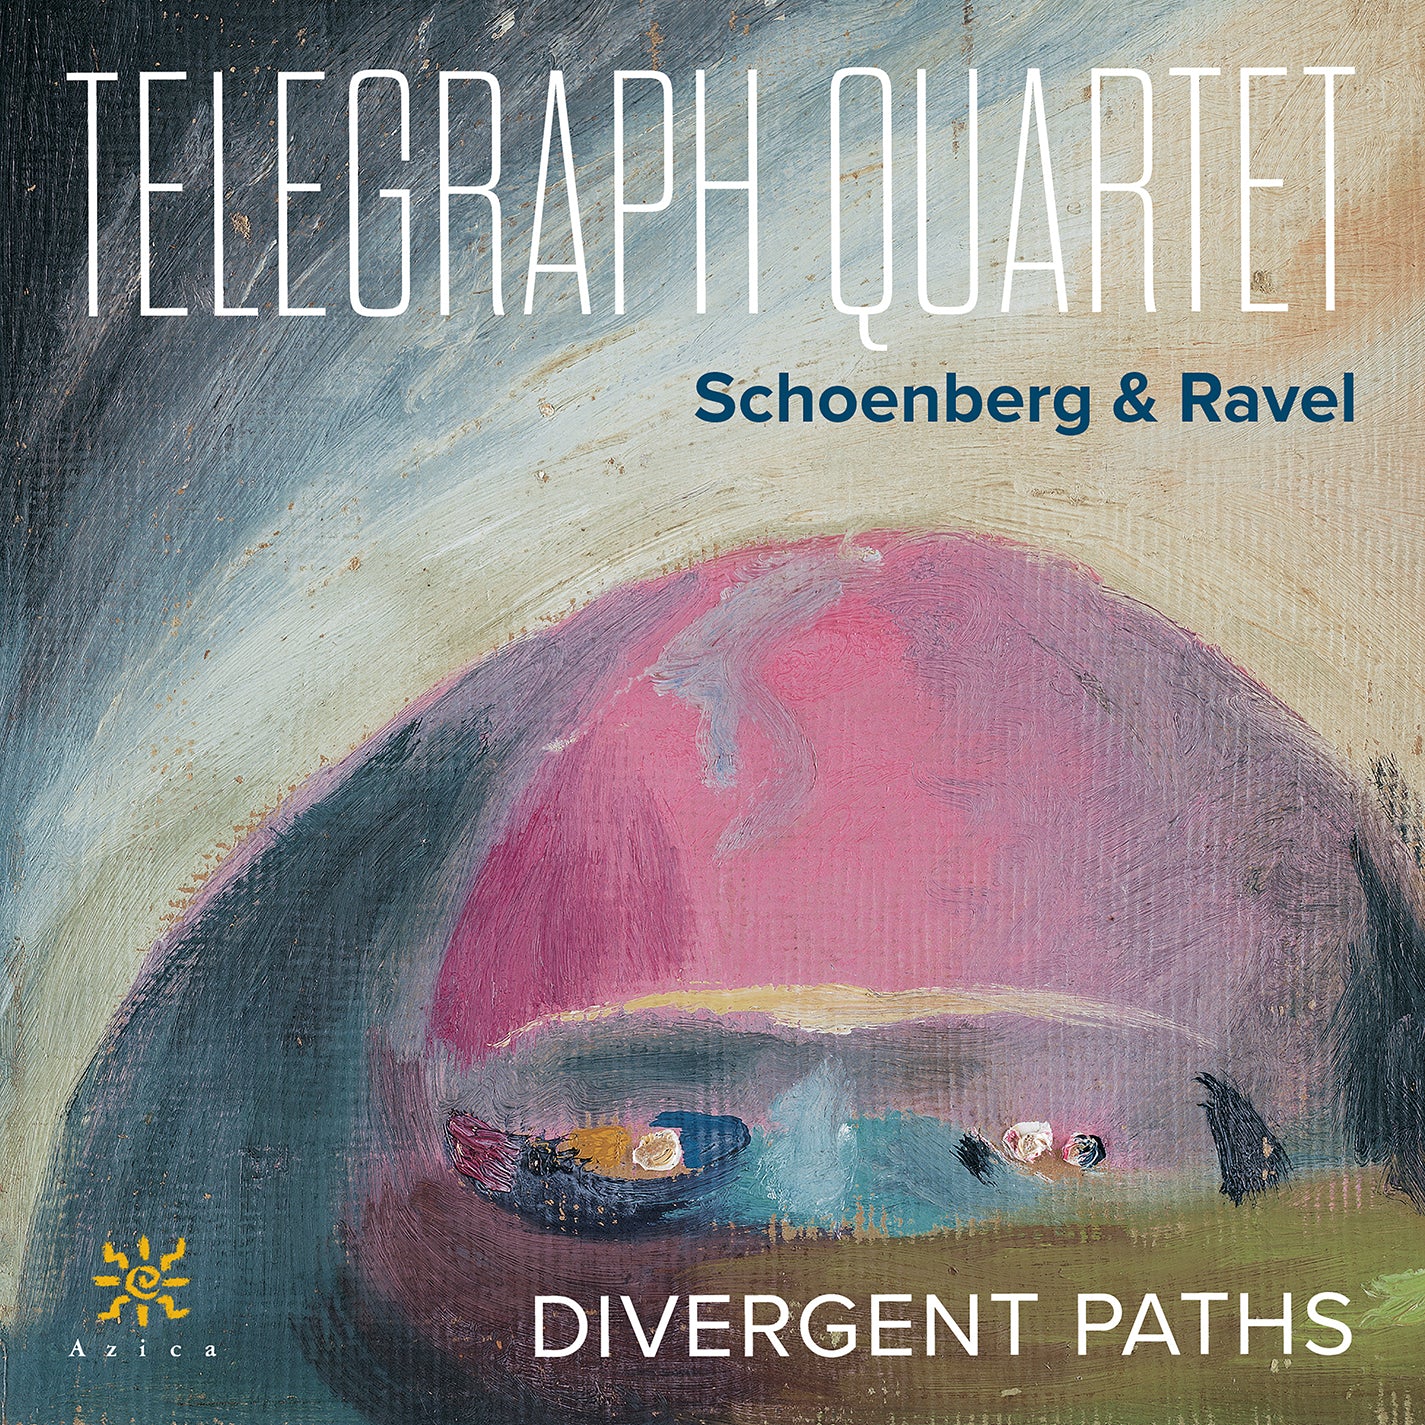 Divergent Paths - Schoenberg & Ravel / Telegraph Quartet